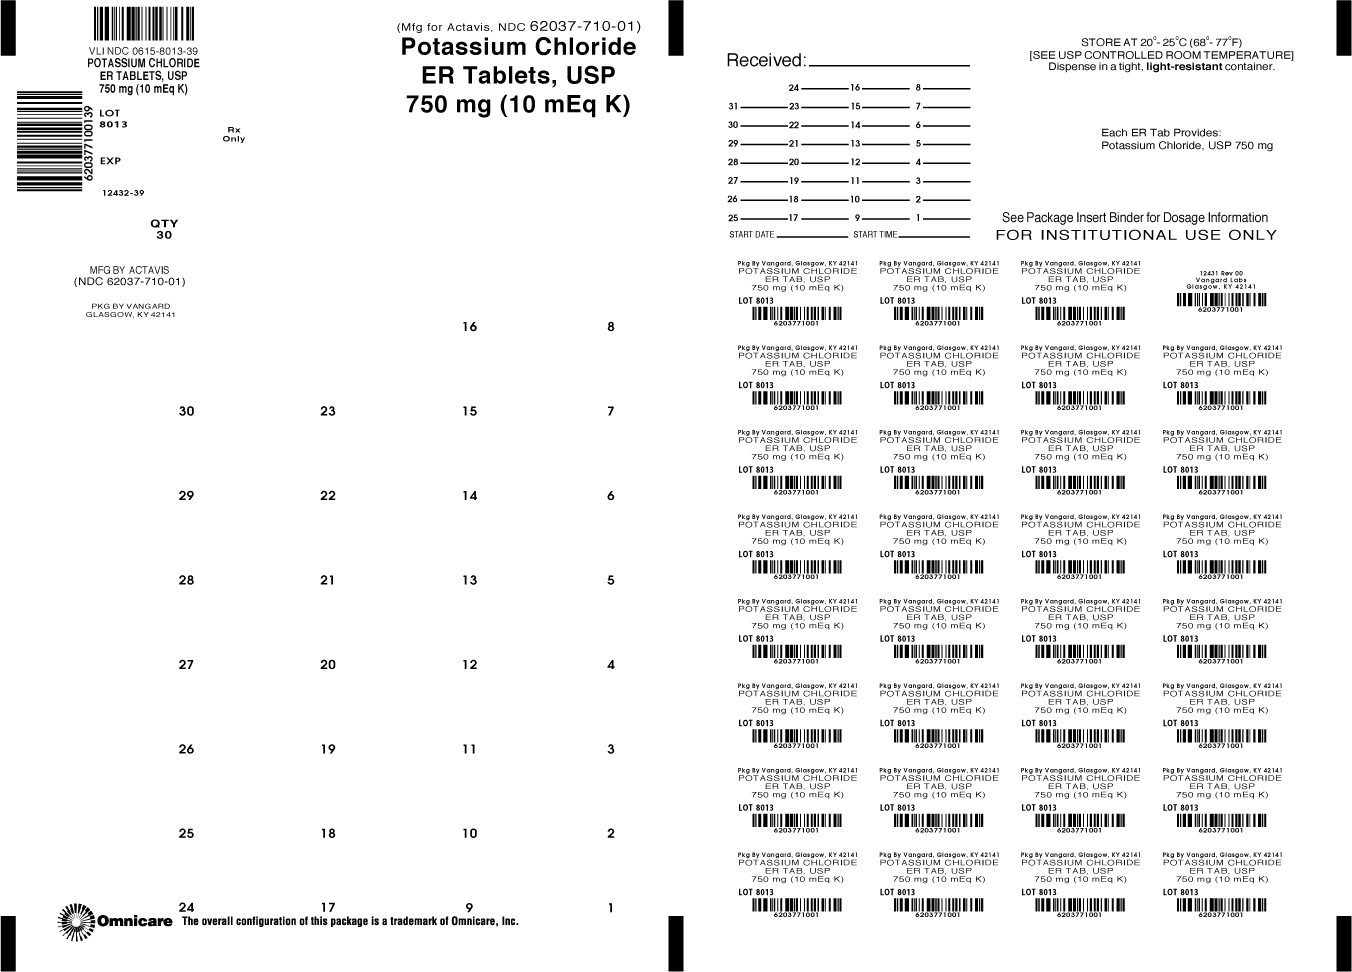 Potassium Chloride ER Tablets, USp 750 mg bingo card label